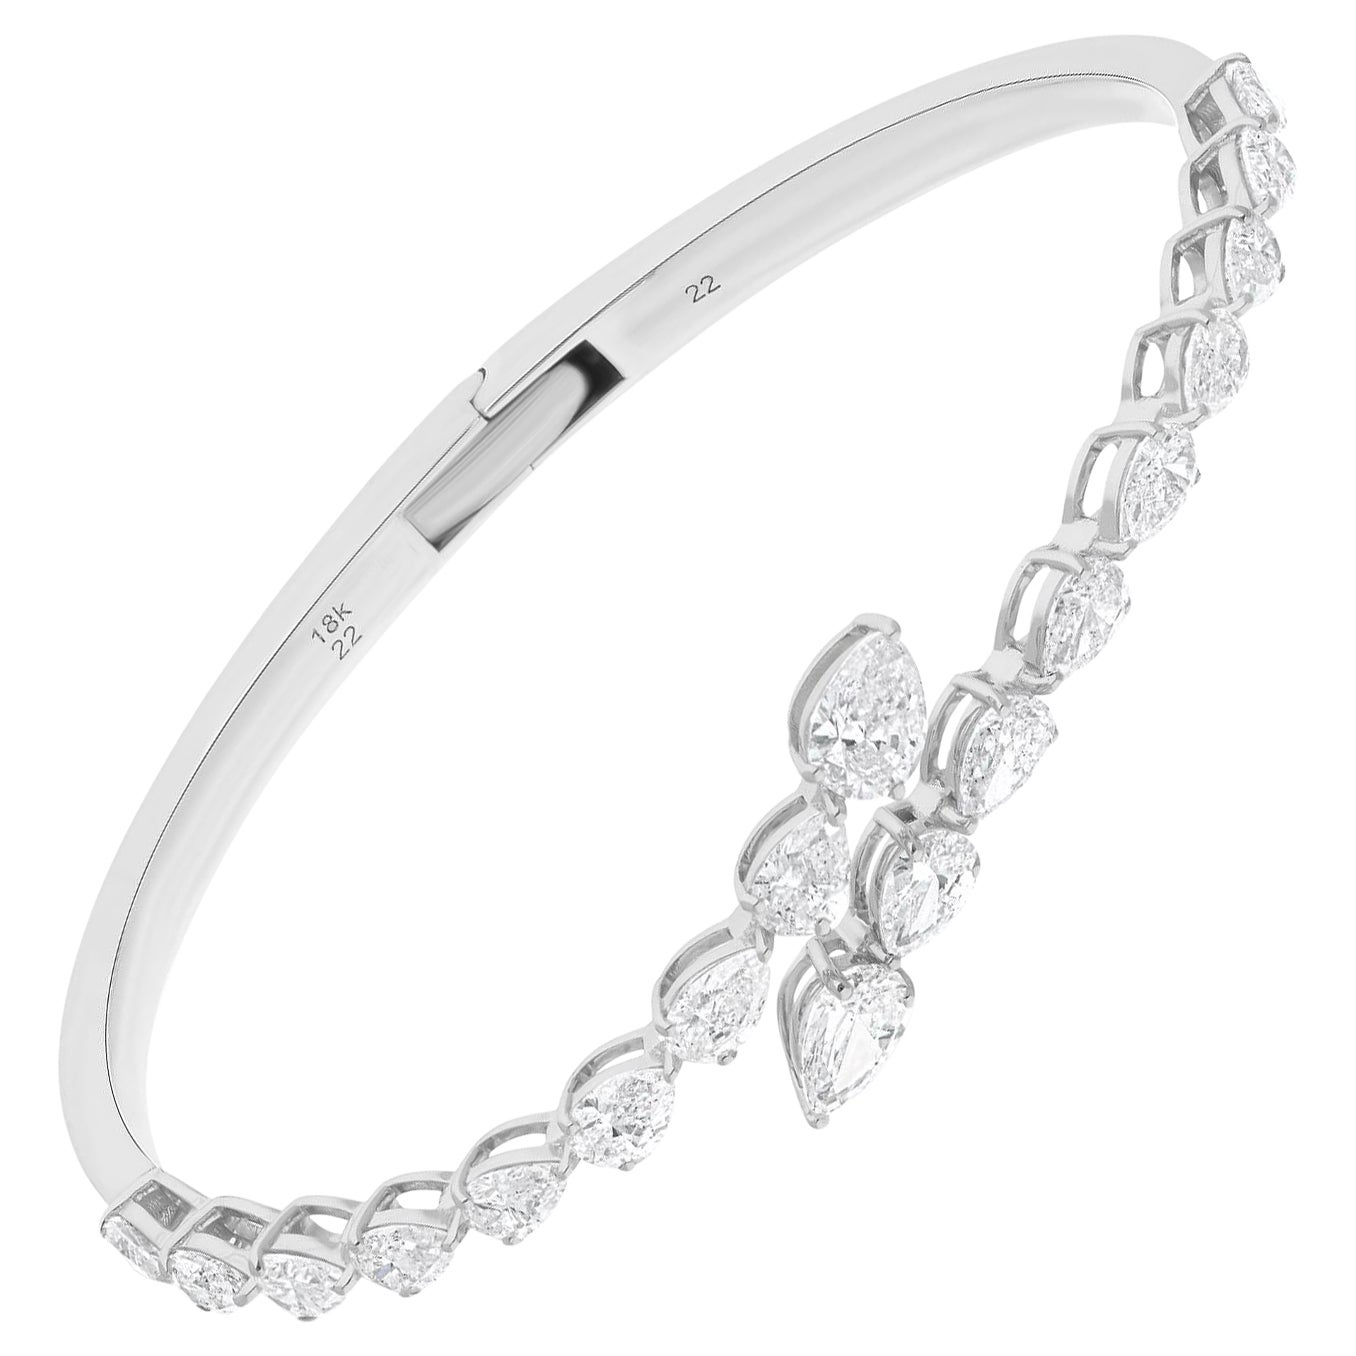 Real SI Clarity HI Color Pear Diamond Cuff Bangle Bracelet 18 Karat White Gold